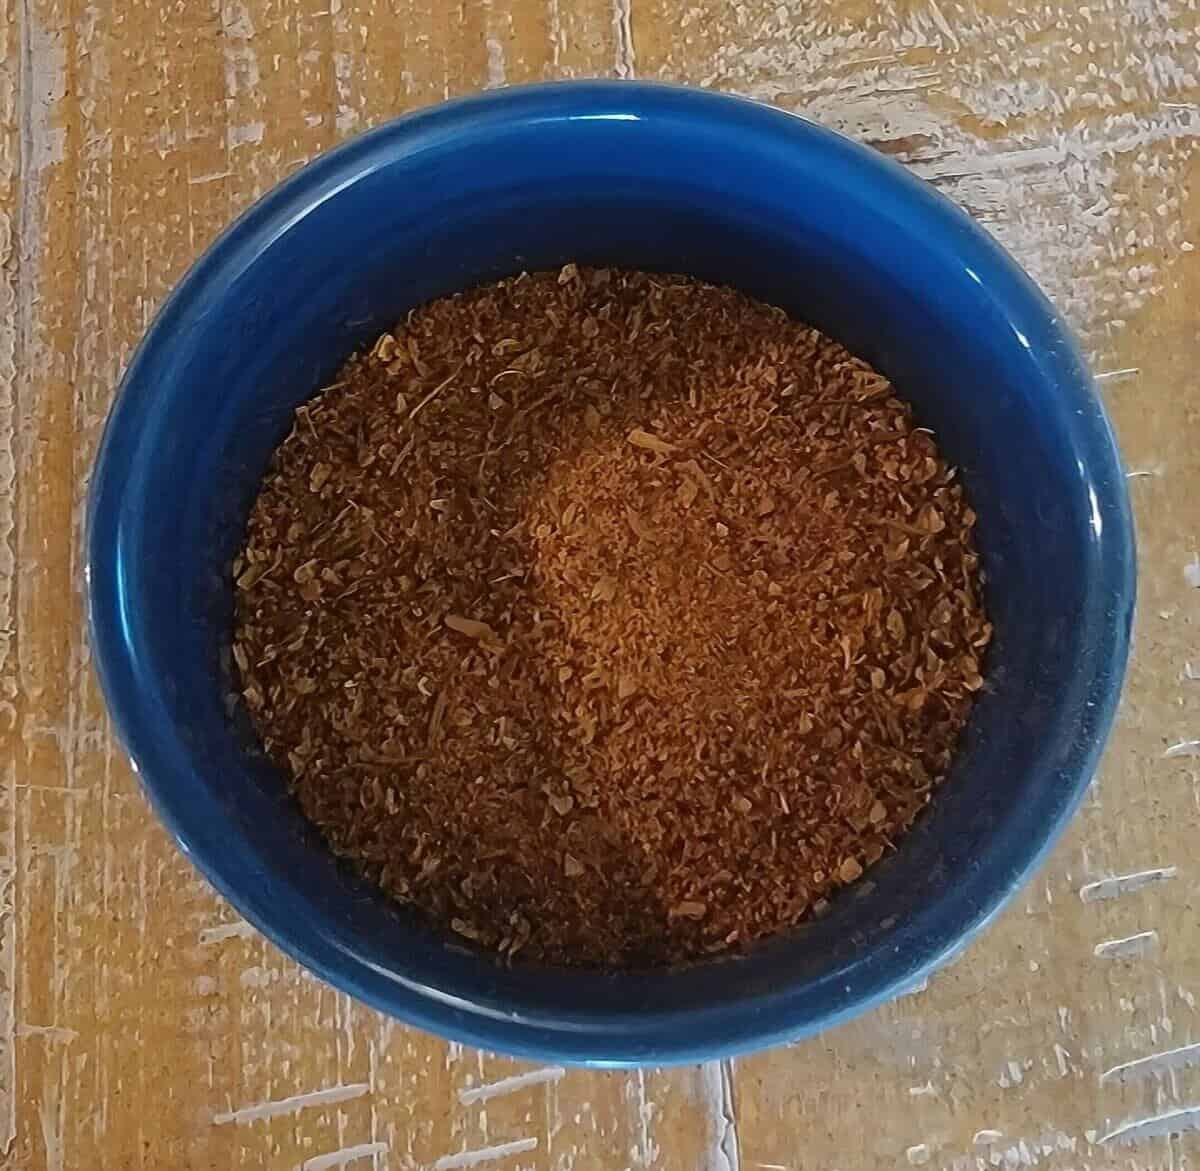 Blackening seasoning spice blend in a round ramekin